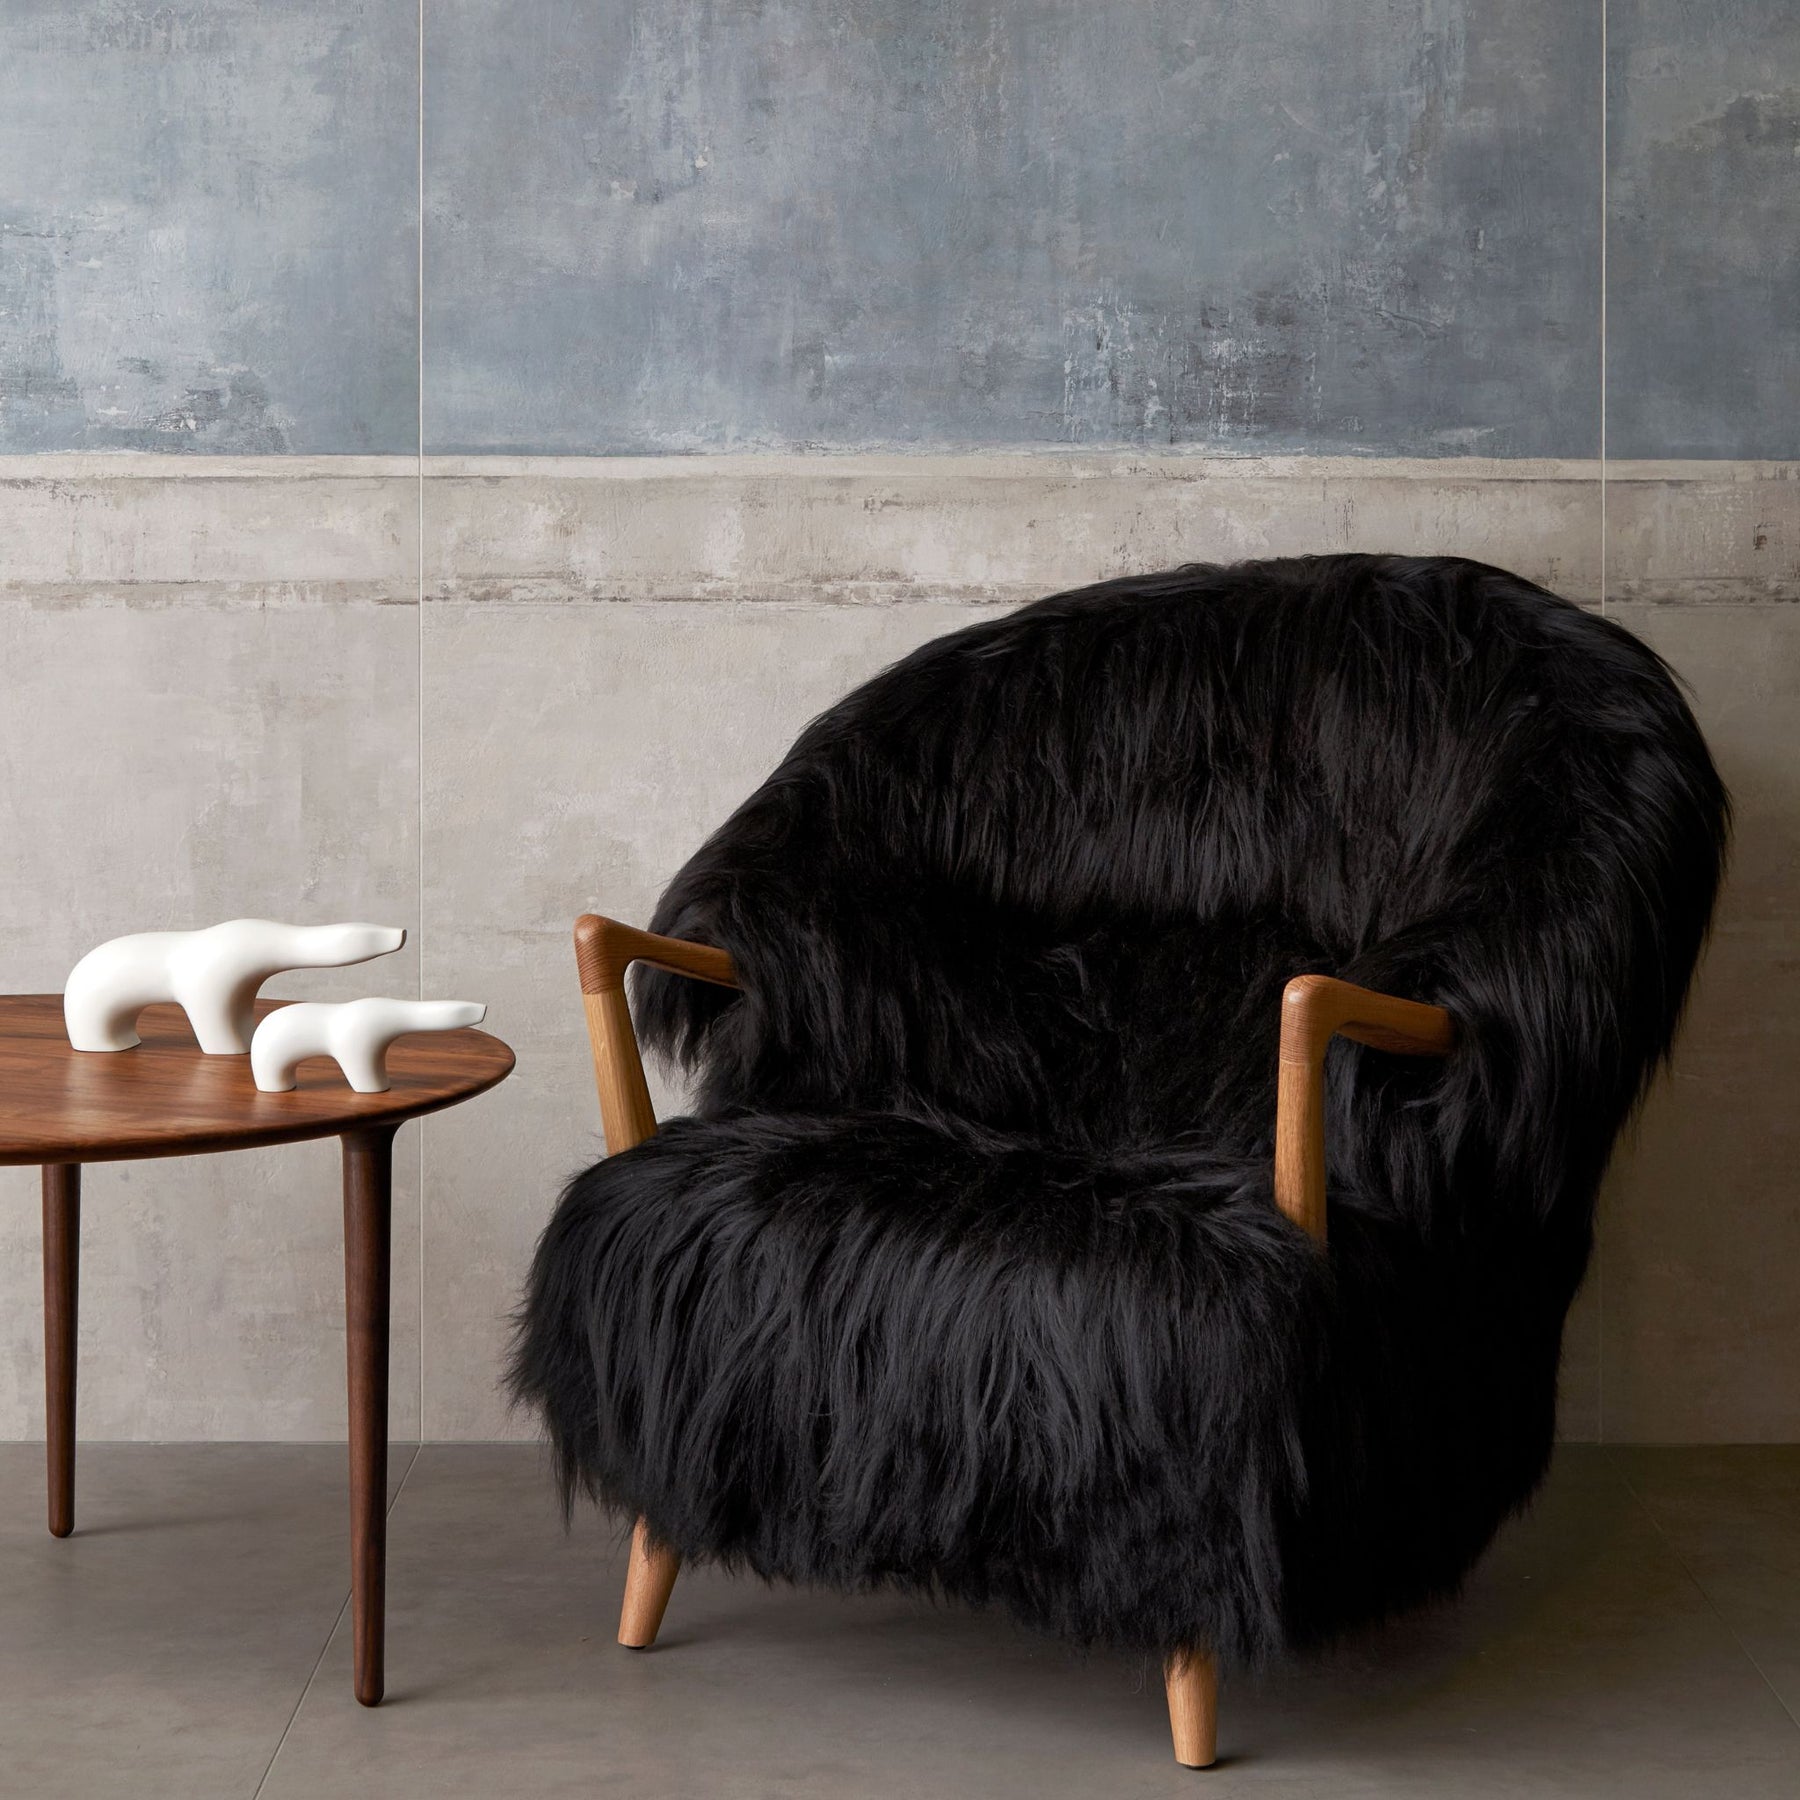 Eikund Fluffy Lounge Chair Black Sheepskin in Norwegian Loft with mini Polar Bears